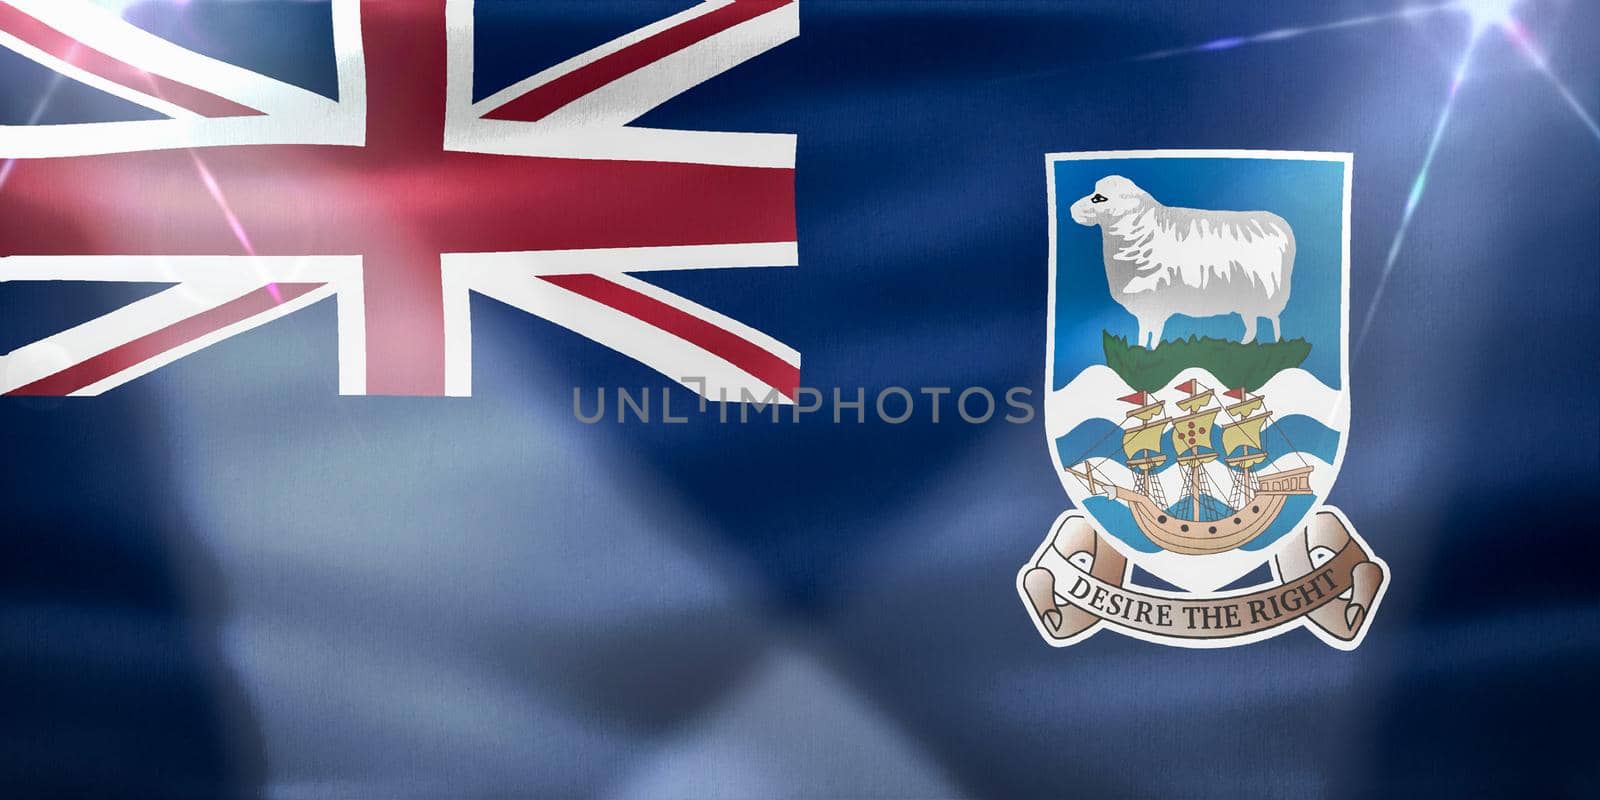 Falkland Islands flag - realistic waving fabric flag by MP_foto71